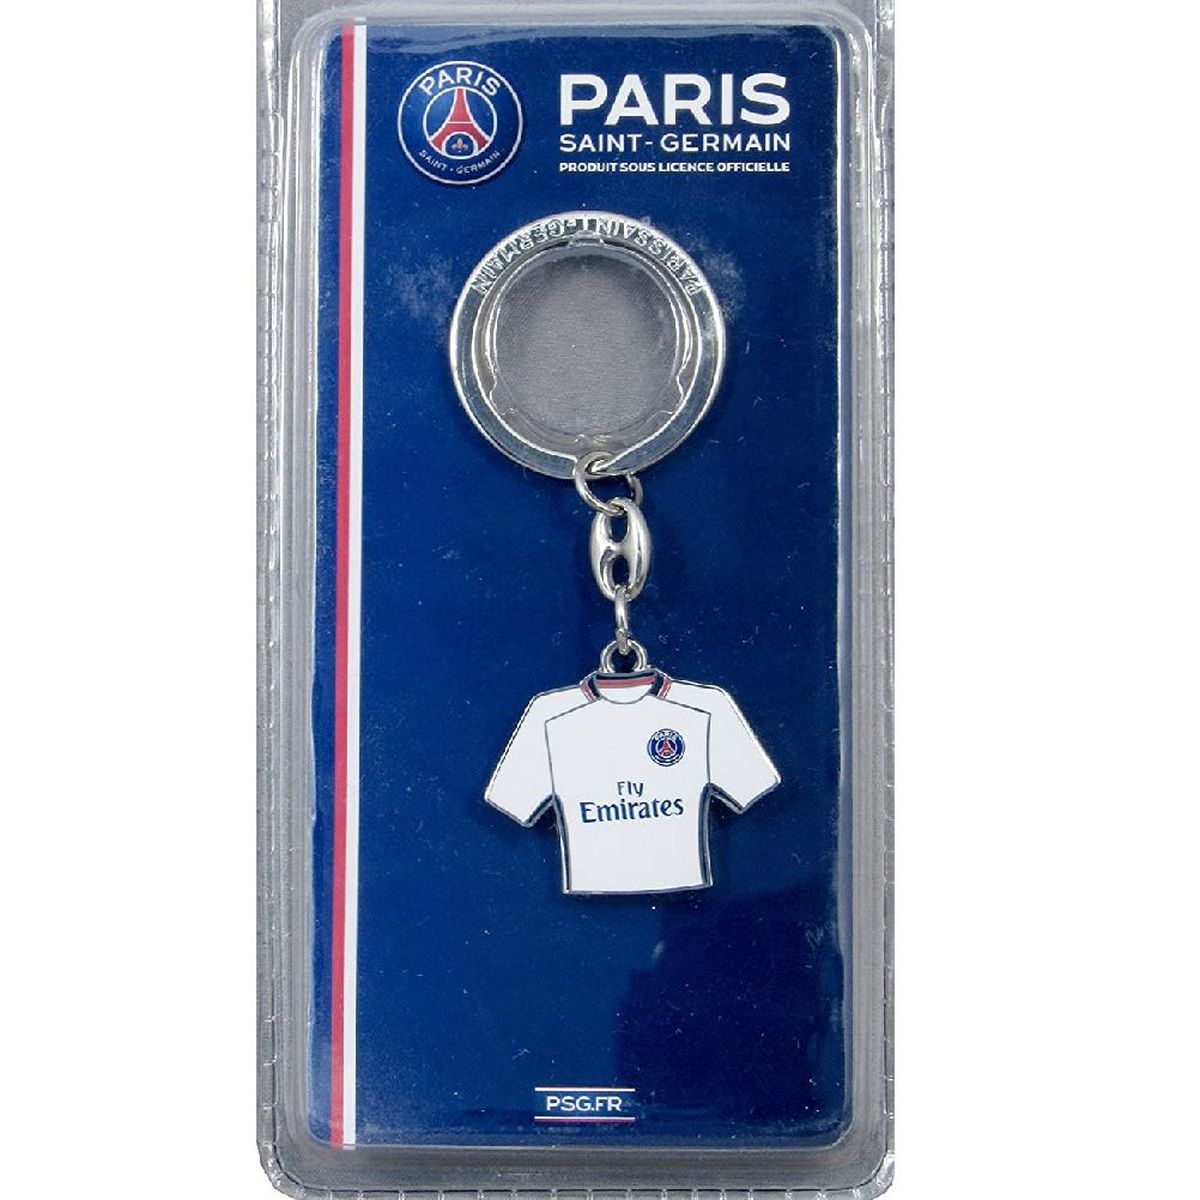 Paris St Germain soccer jersey Keyring